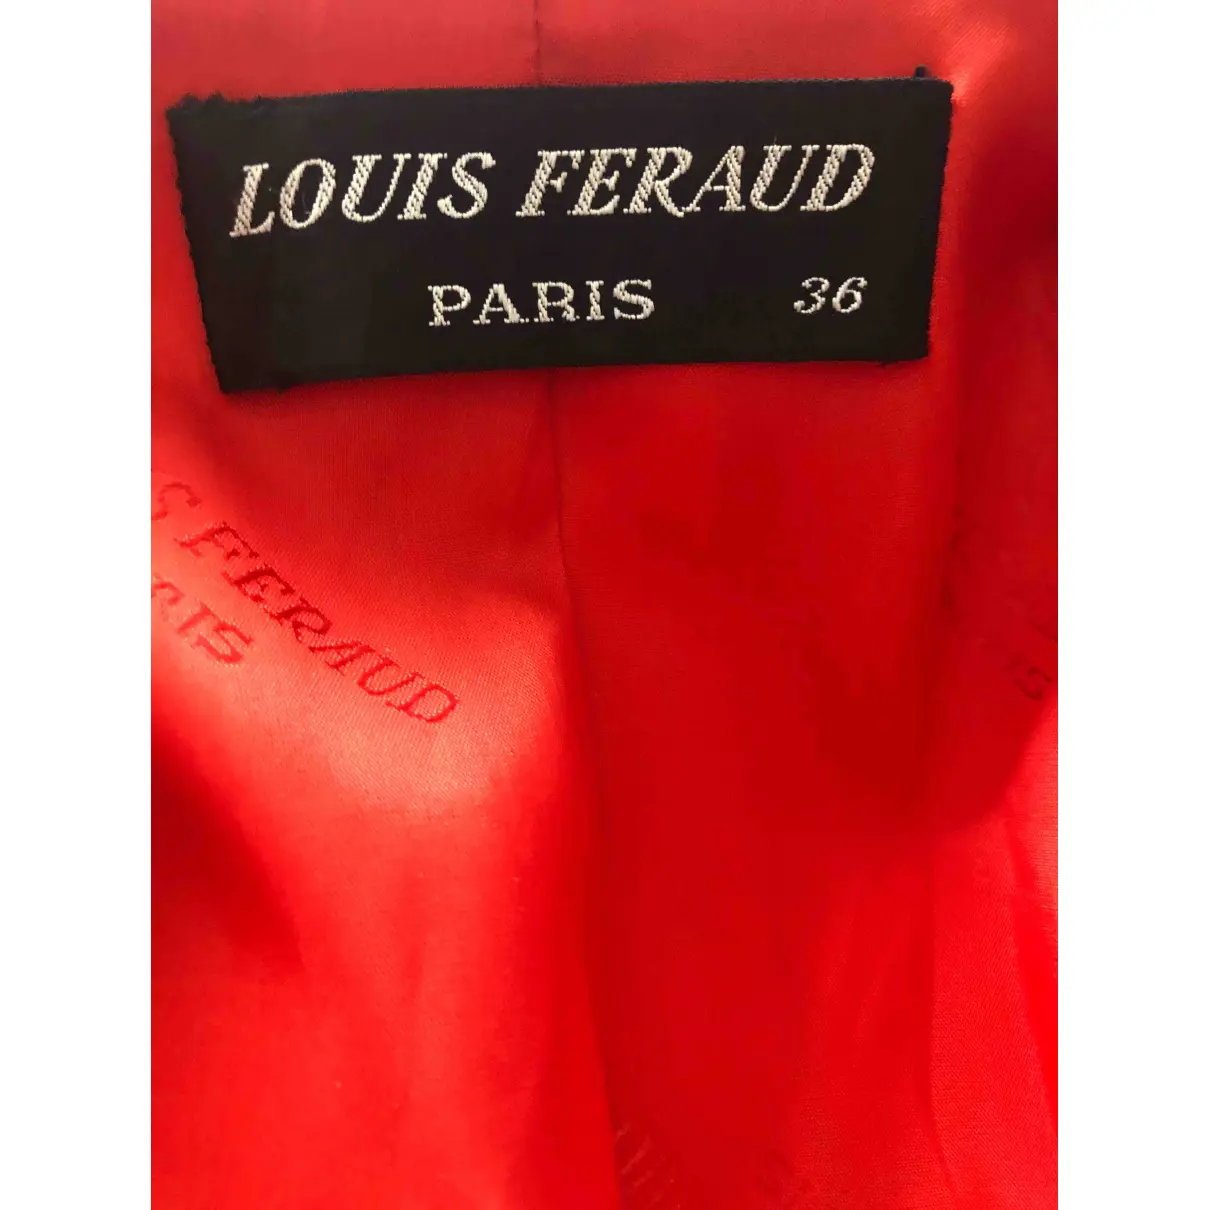 Wool coat Louis Feraud